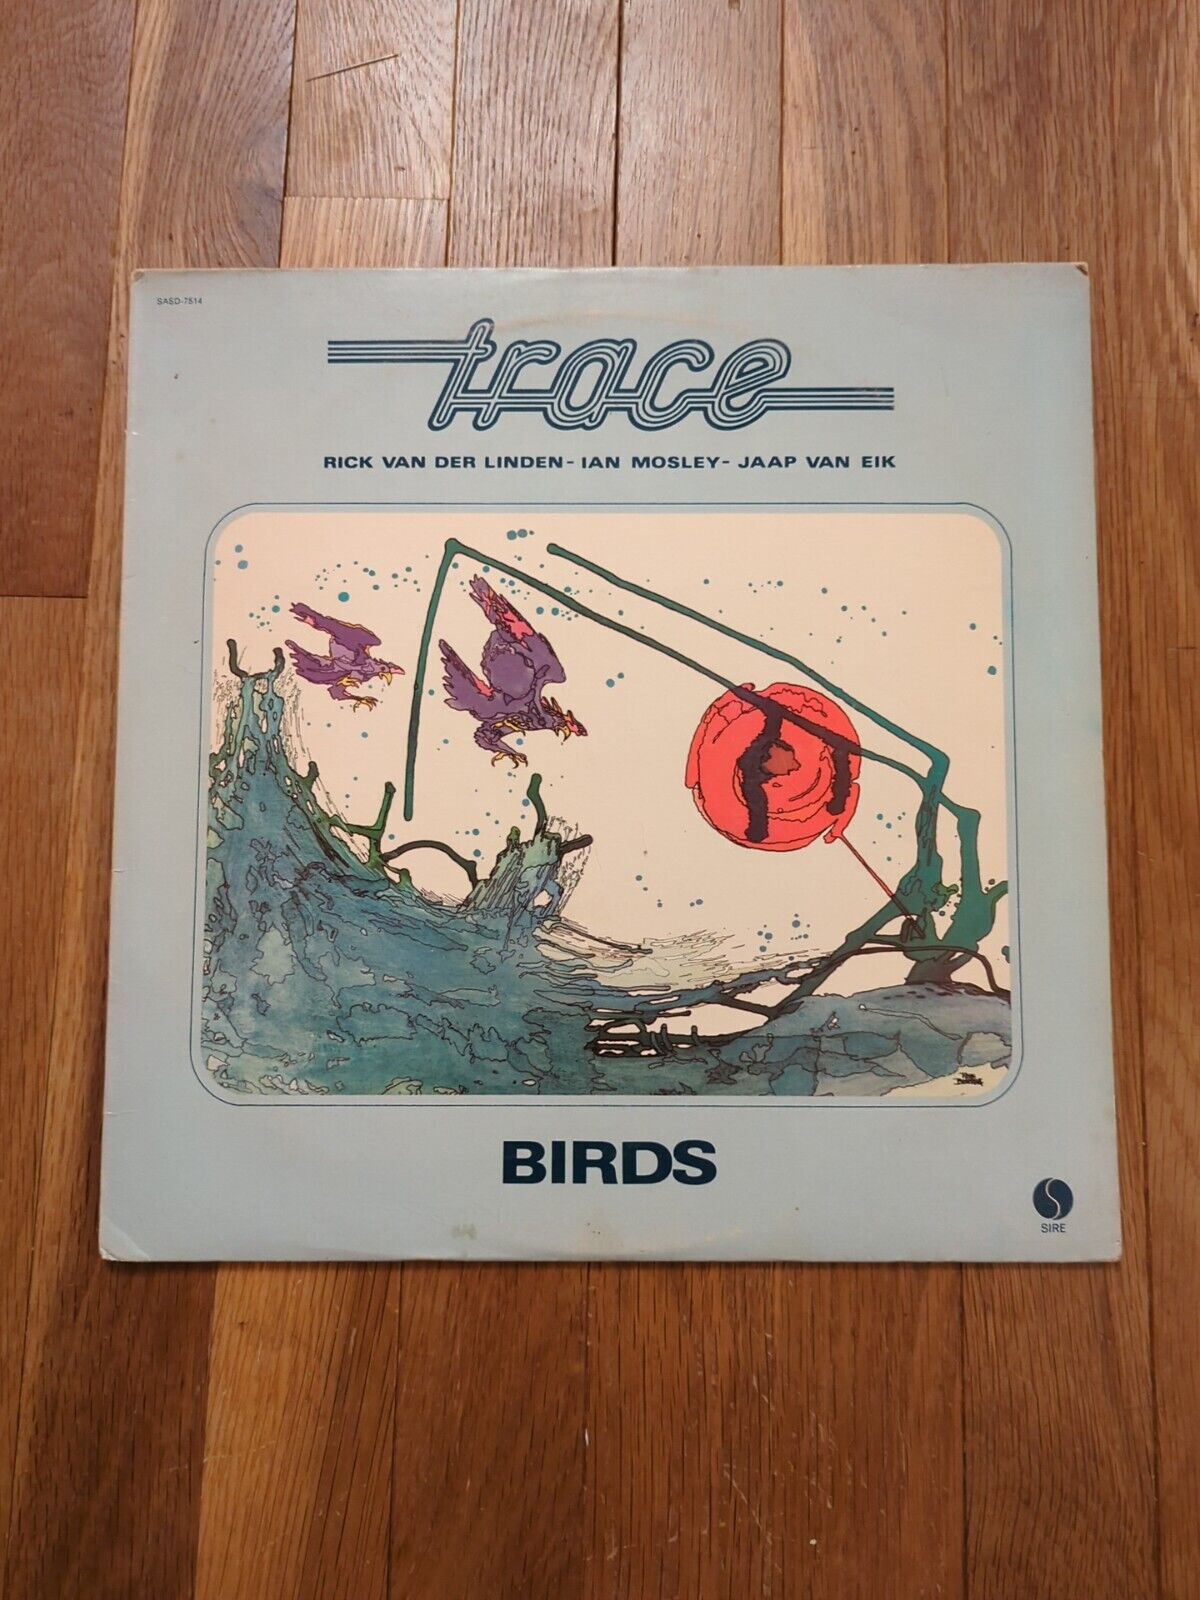 TRACE - Birds - \'75 Sire Prog LP - Dutch band